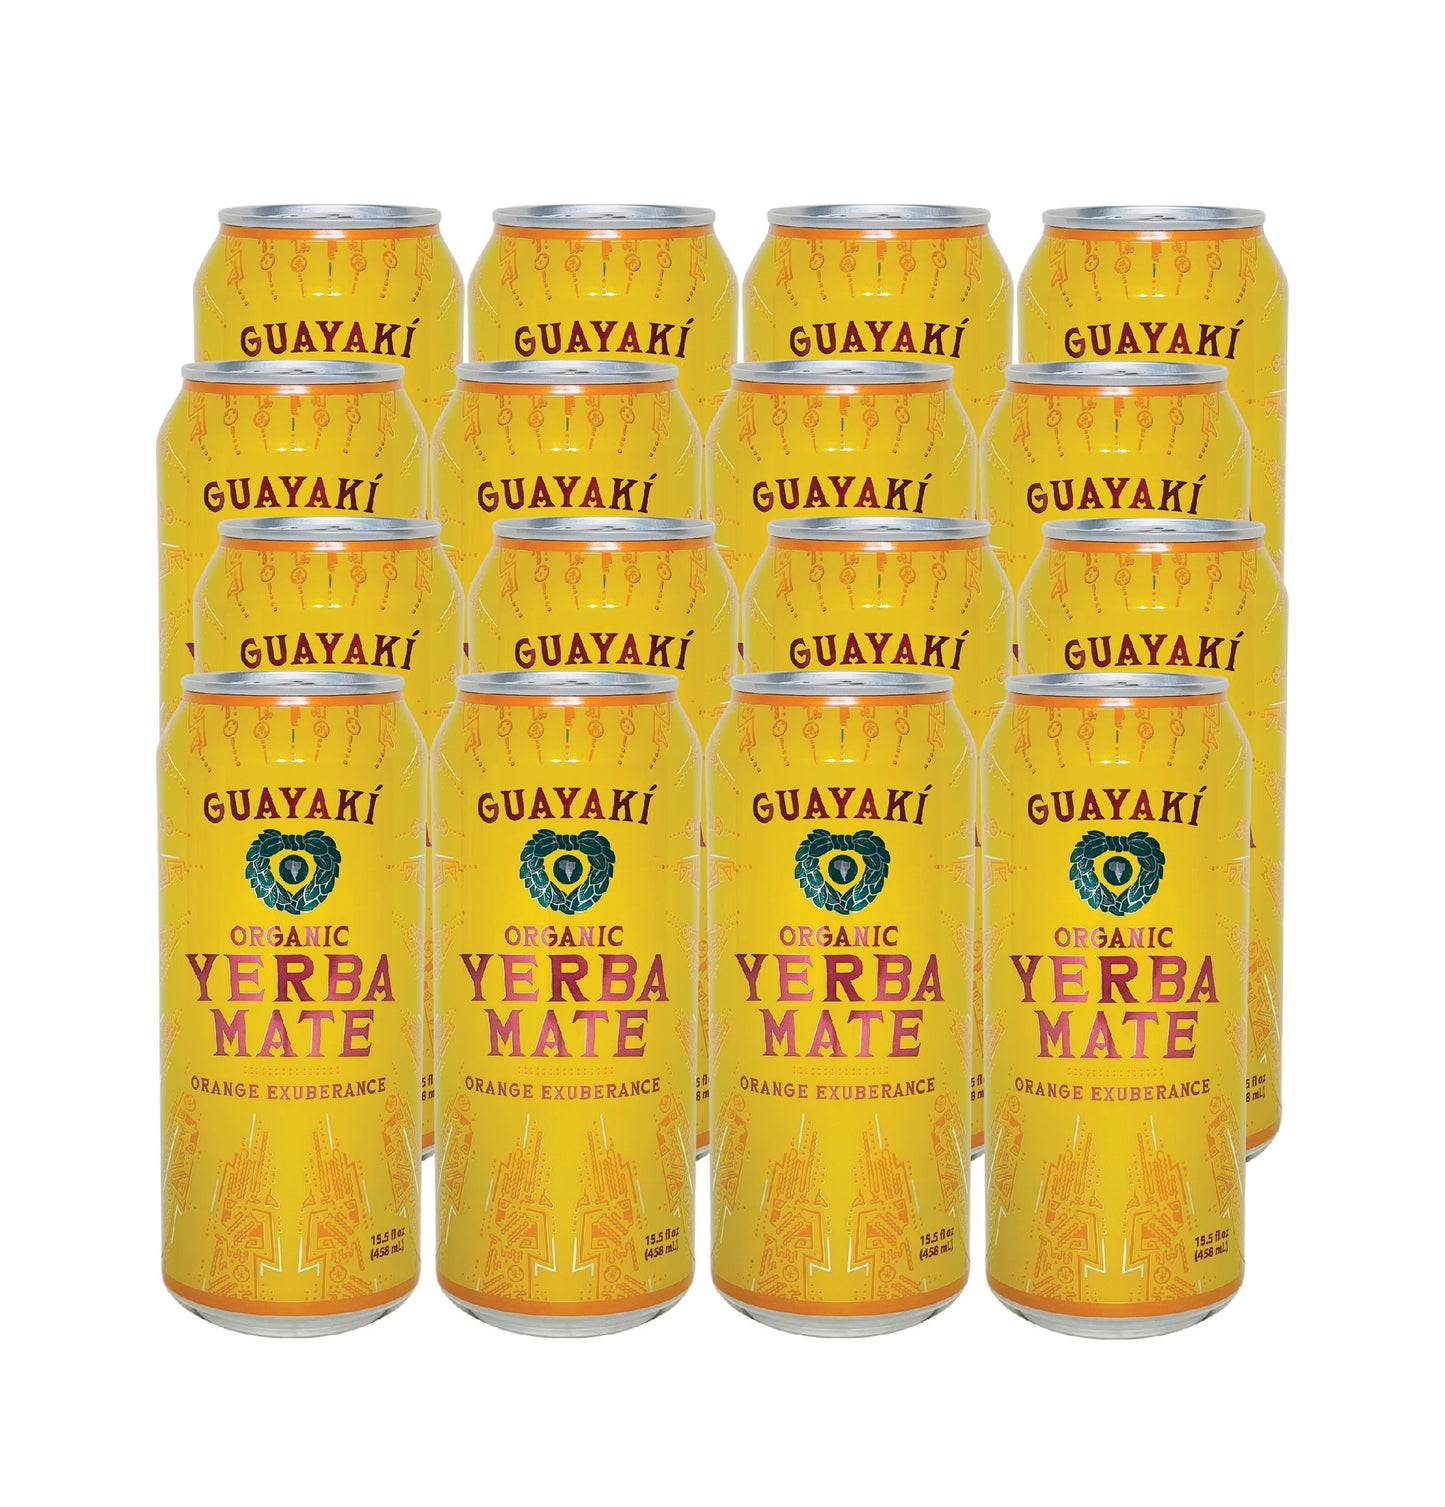 GUAYAKI Yerba Mate- Orange Exuberance (15.5 Fl oz) (16 Cans)